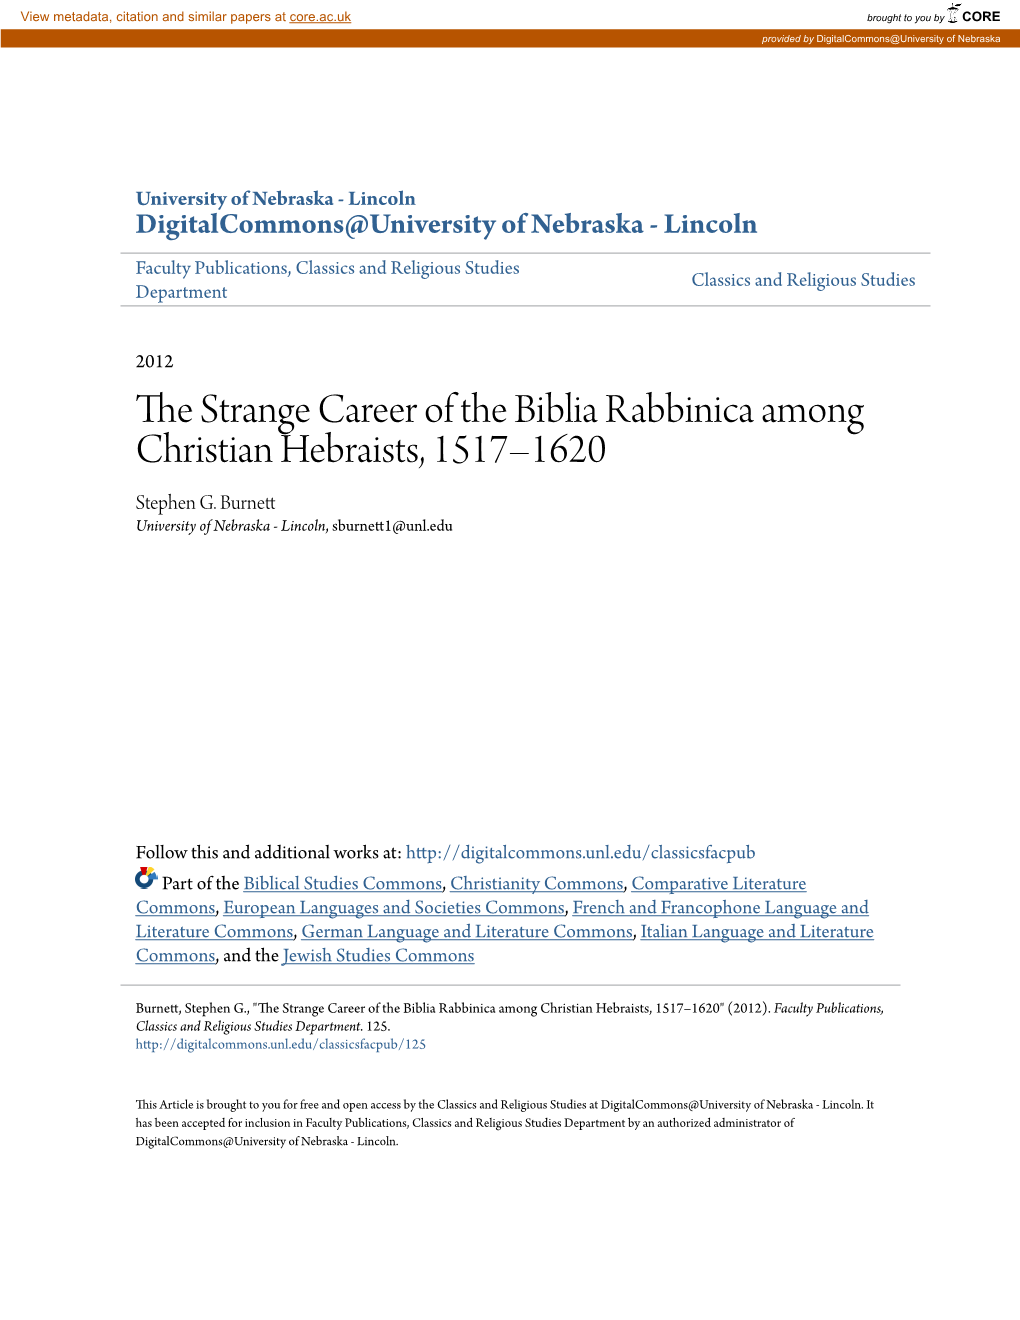 The Strange Career of the Biblia Rabbinica Among Christian Hebraists, 1517–1620